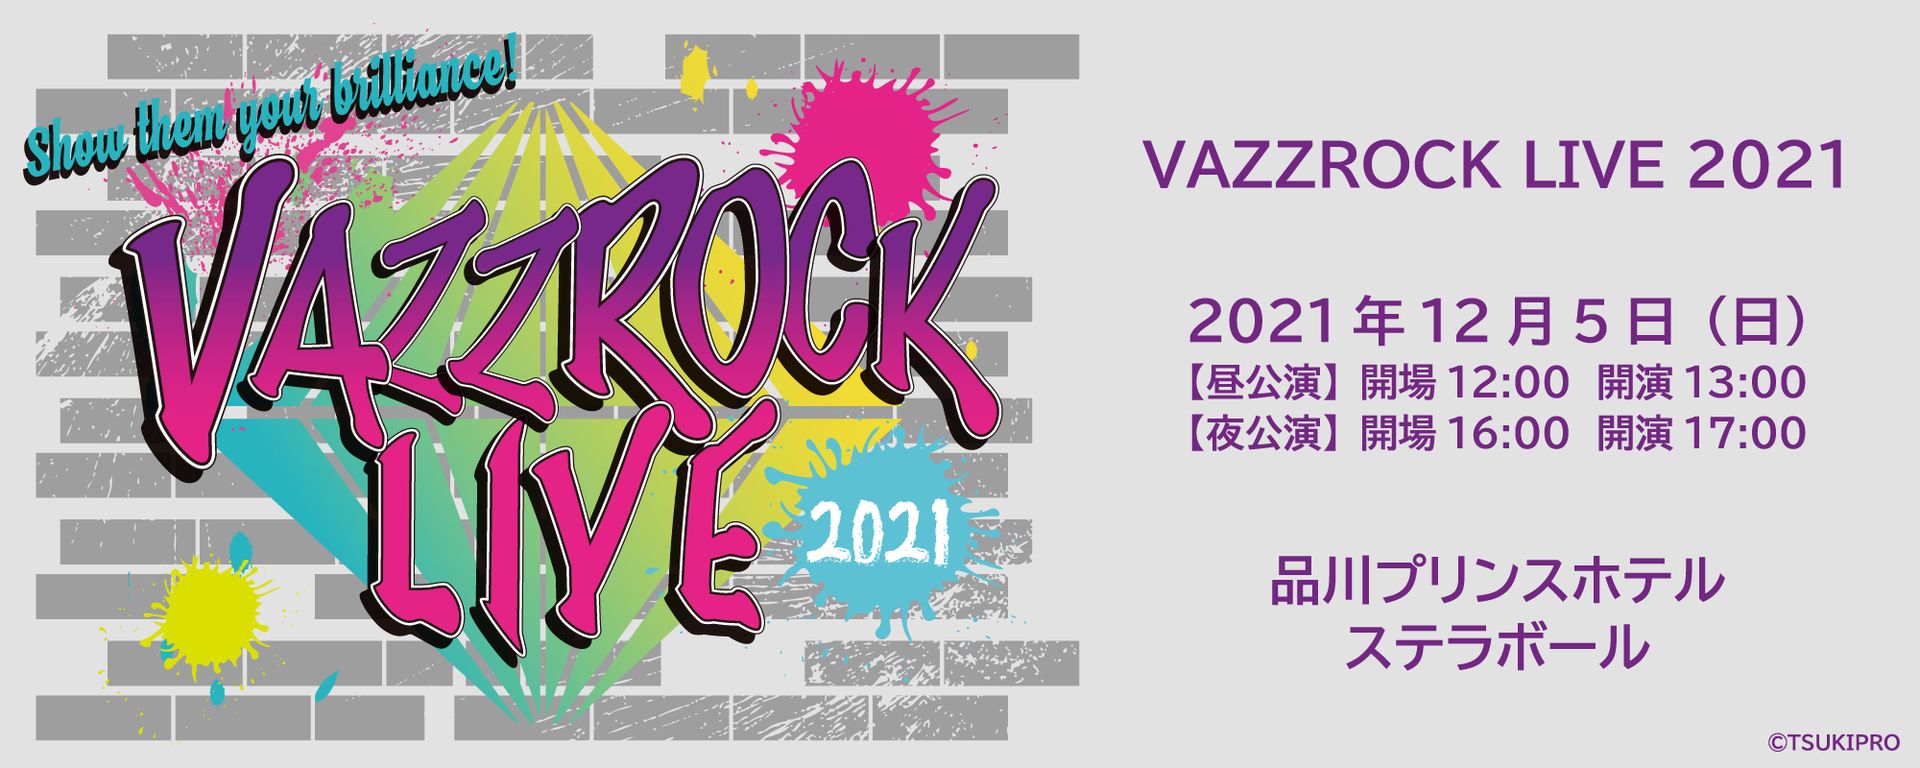 [Streaming+] VAZZROCK LIVE 2021